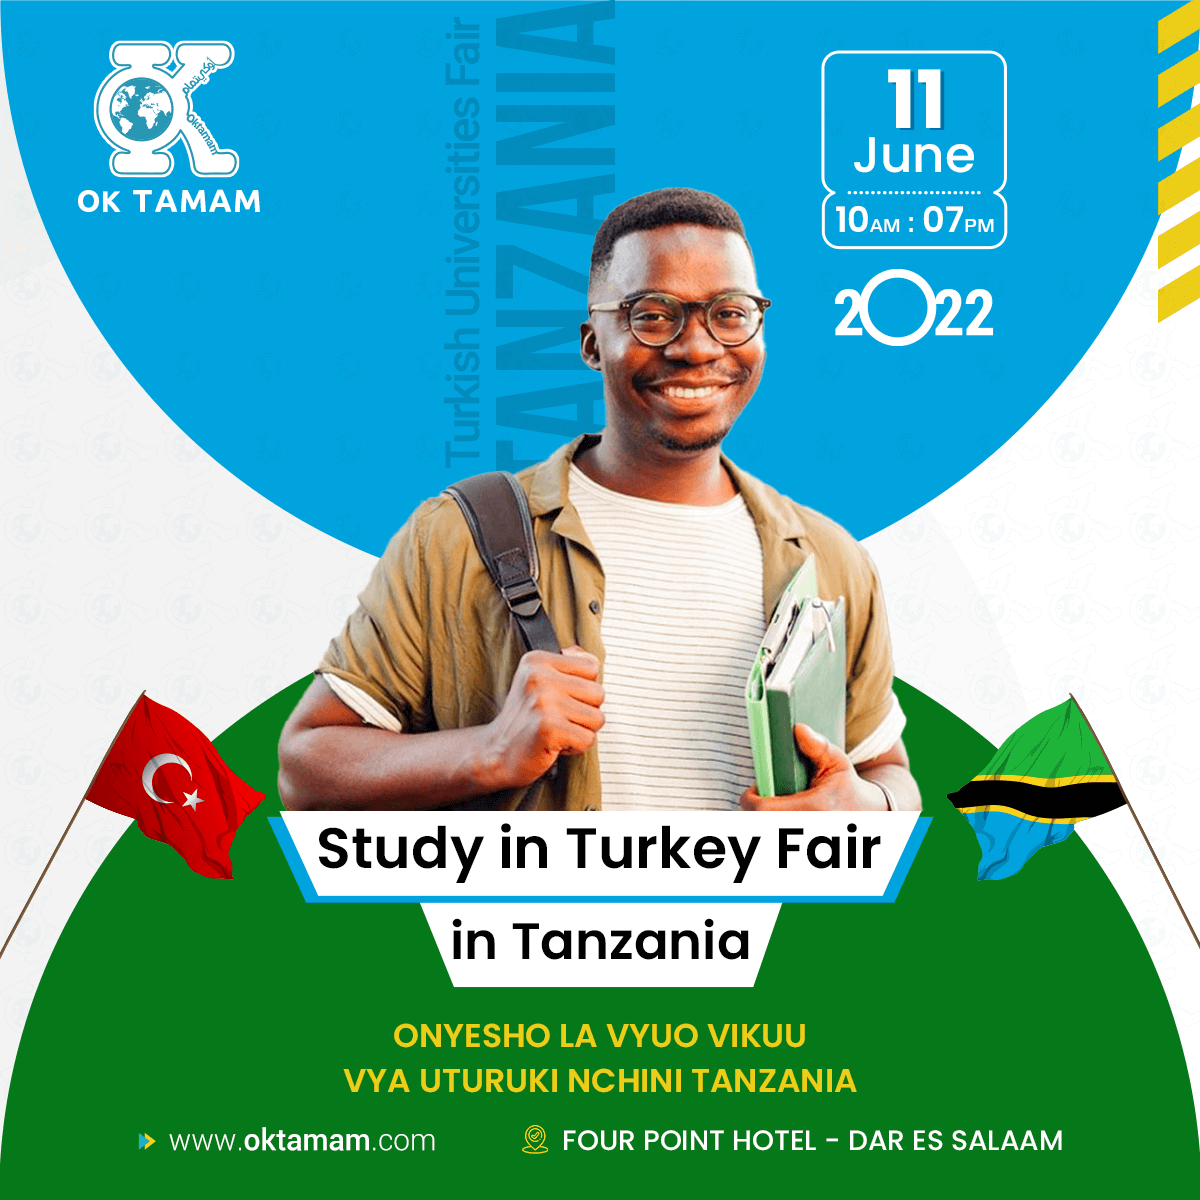 Fairs-OK-TAMAM-2022-Tanzania-01